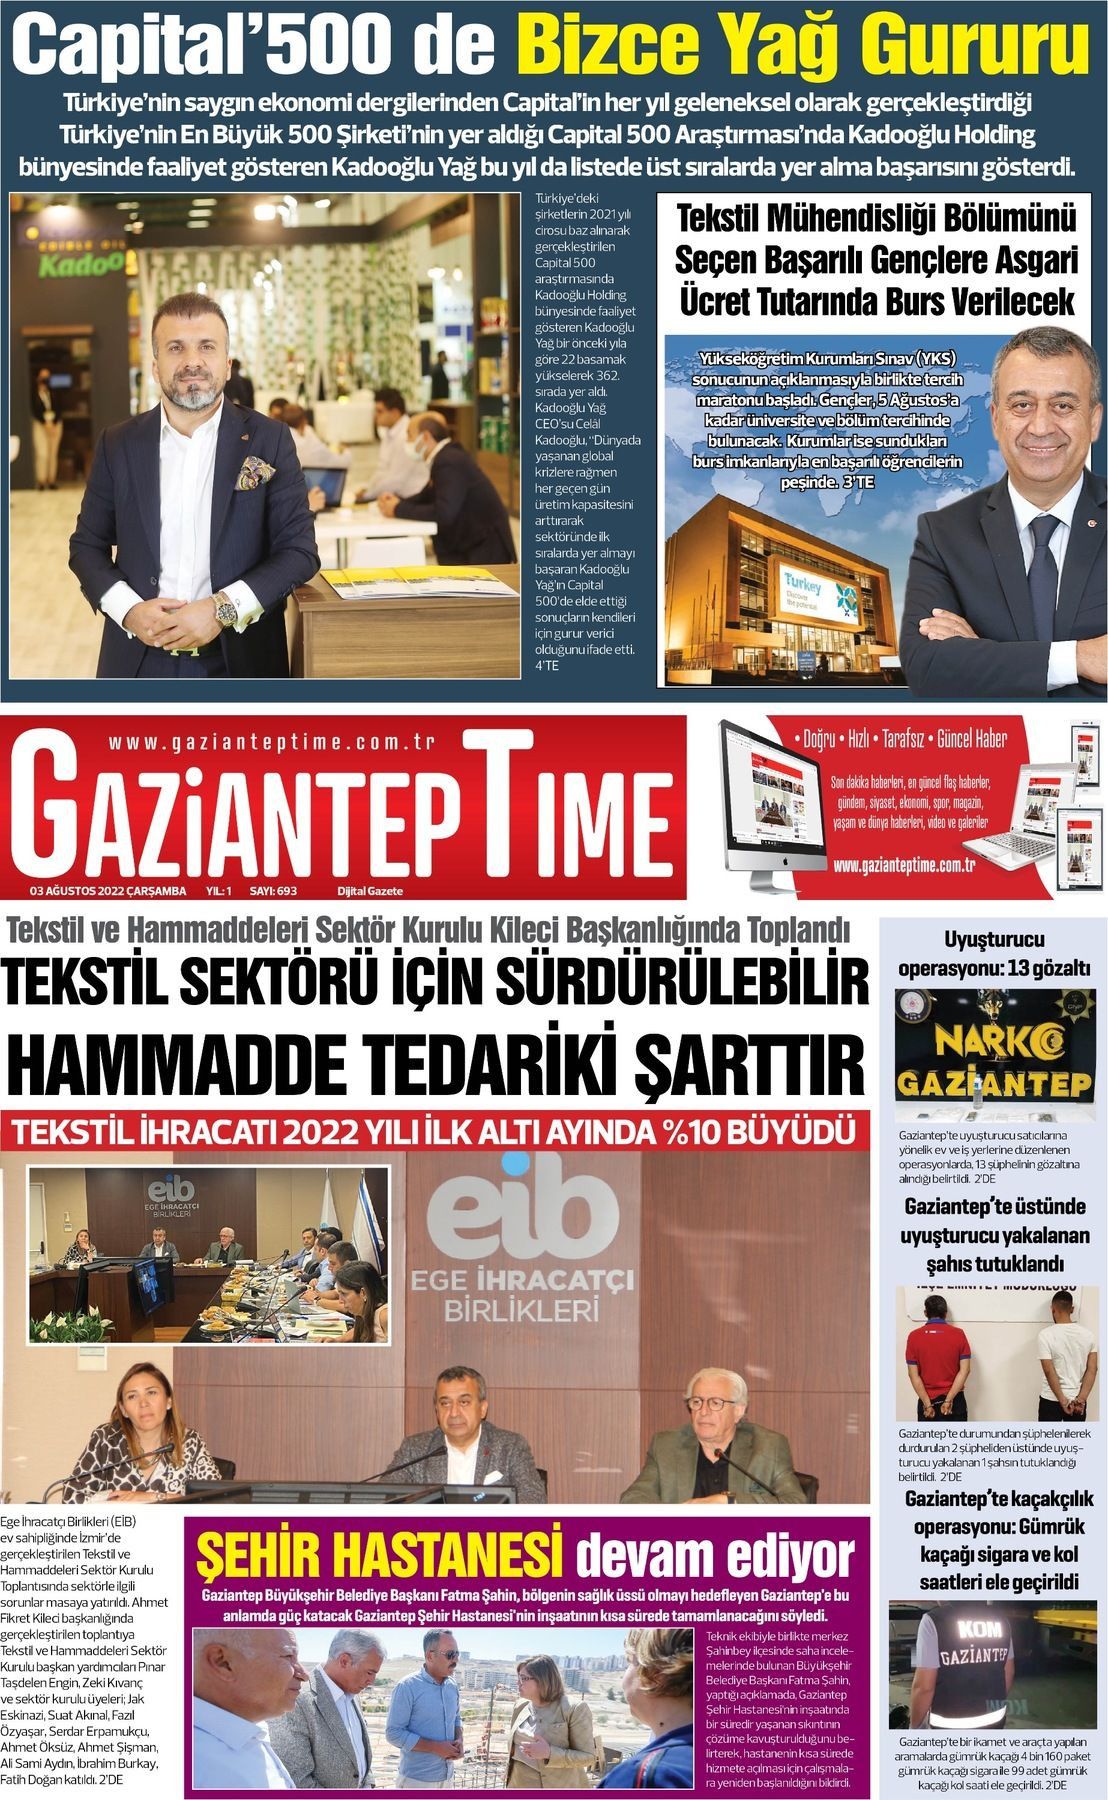 08 Ağustos 2022 Gaziantep Time Gazete Manşeti